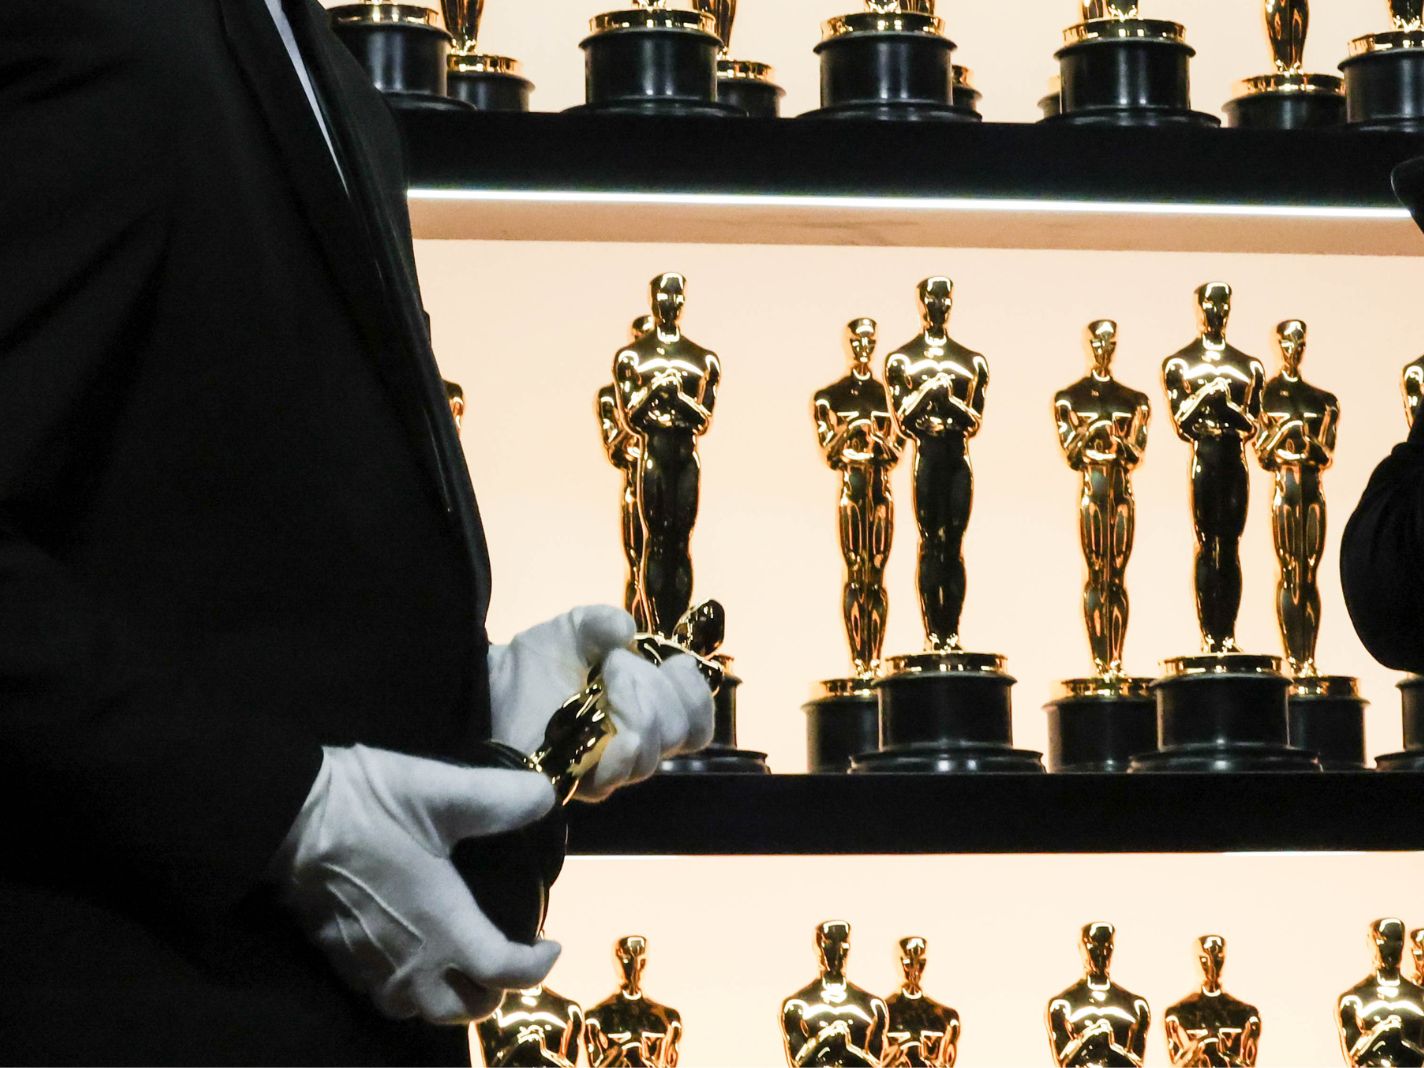 Oscars 2023 Presenters Include Michael B. Jordan, Janelle Monáe